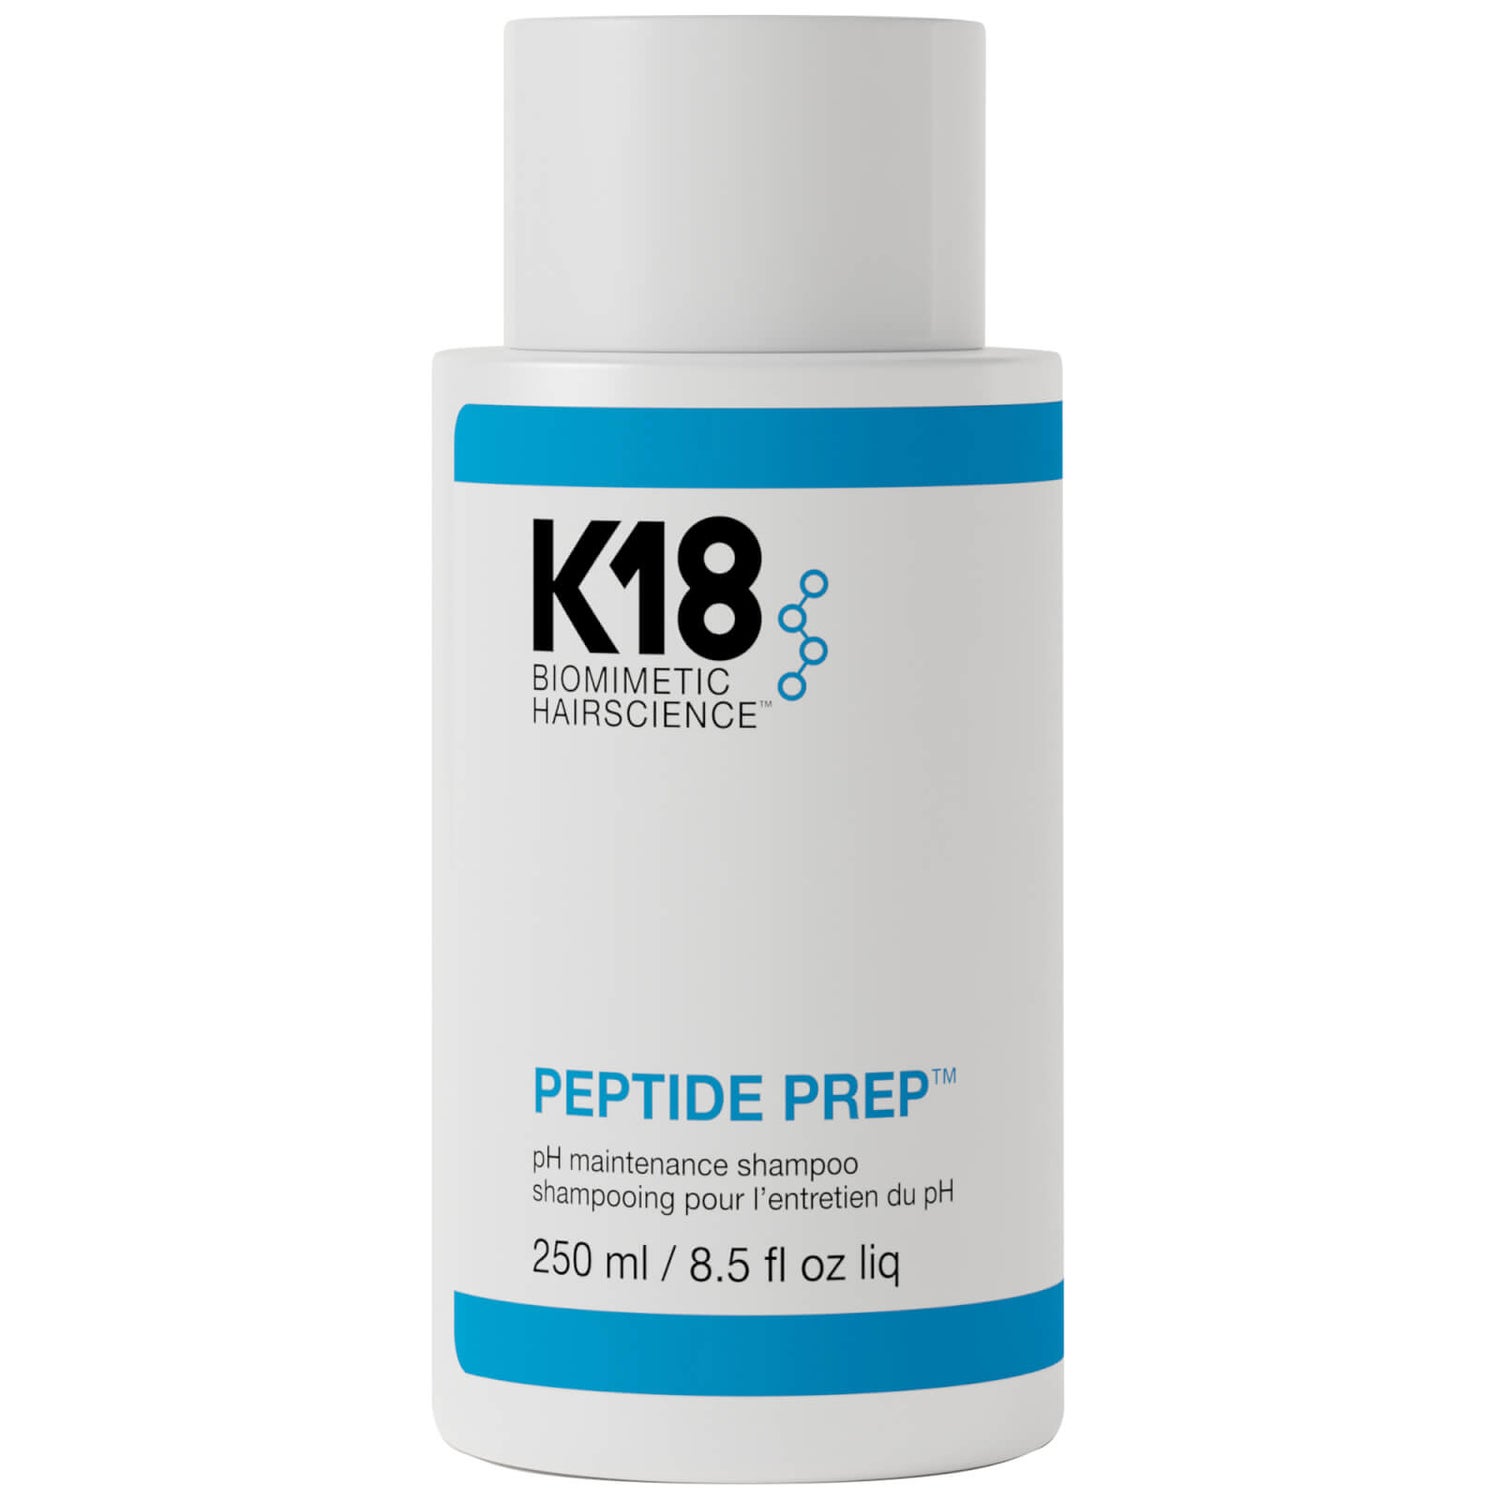 K18 Peptide Prep Ph-Maintenance Shampoo 250ml